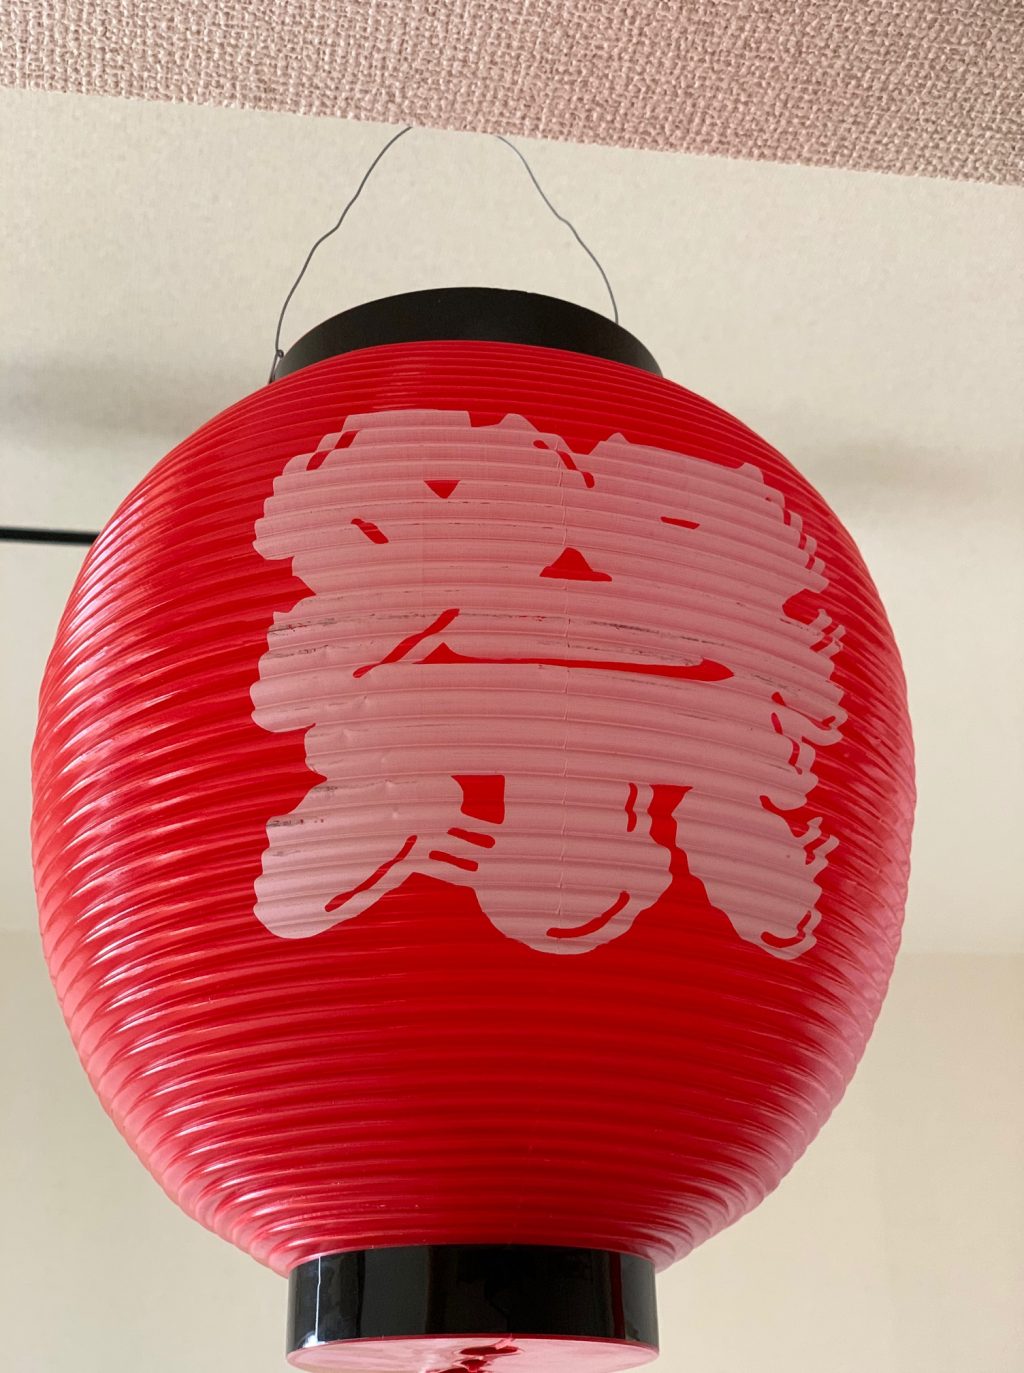 nothing says Natsu matsuri festival like lanterns